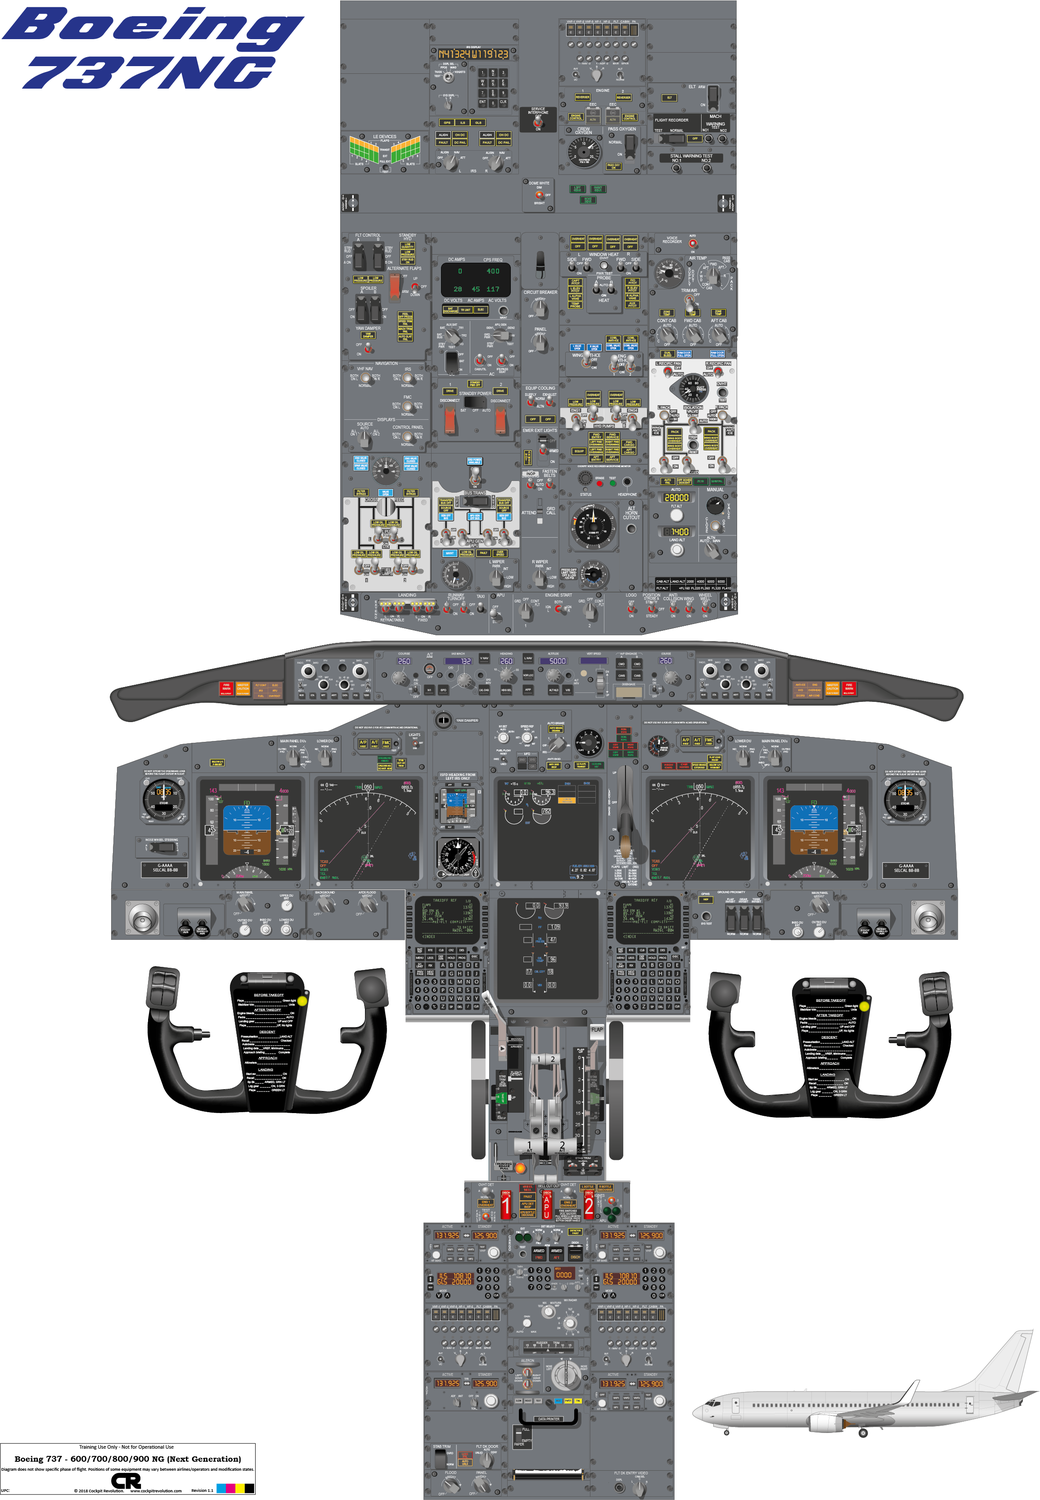 Boeing 737-NG & MAX Cockpit Posters - Printed